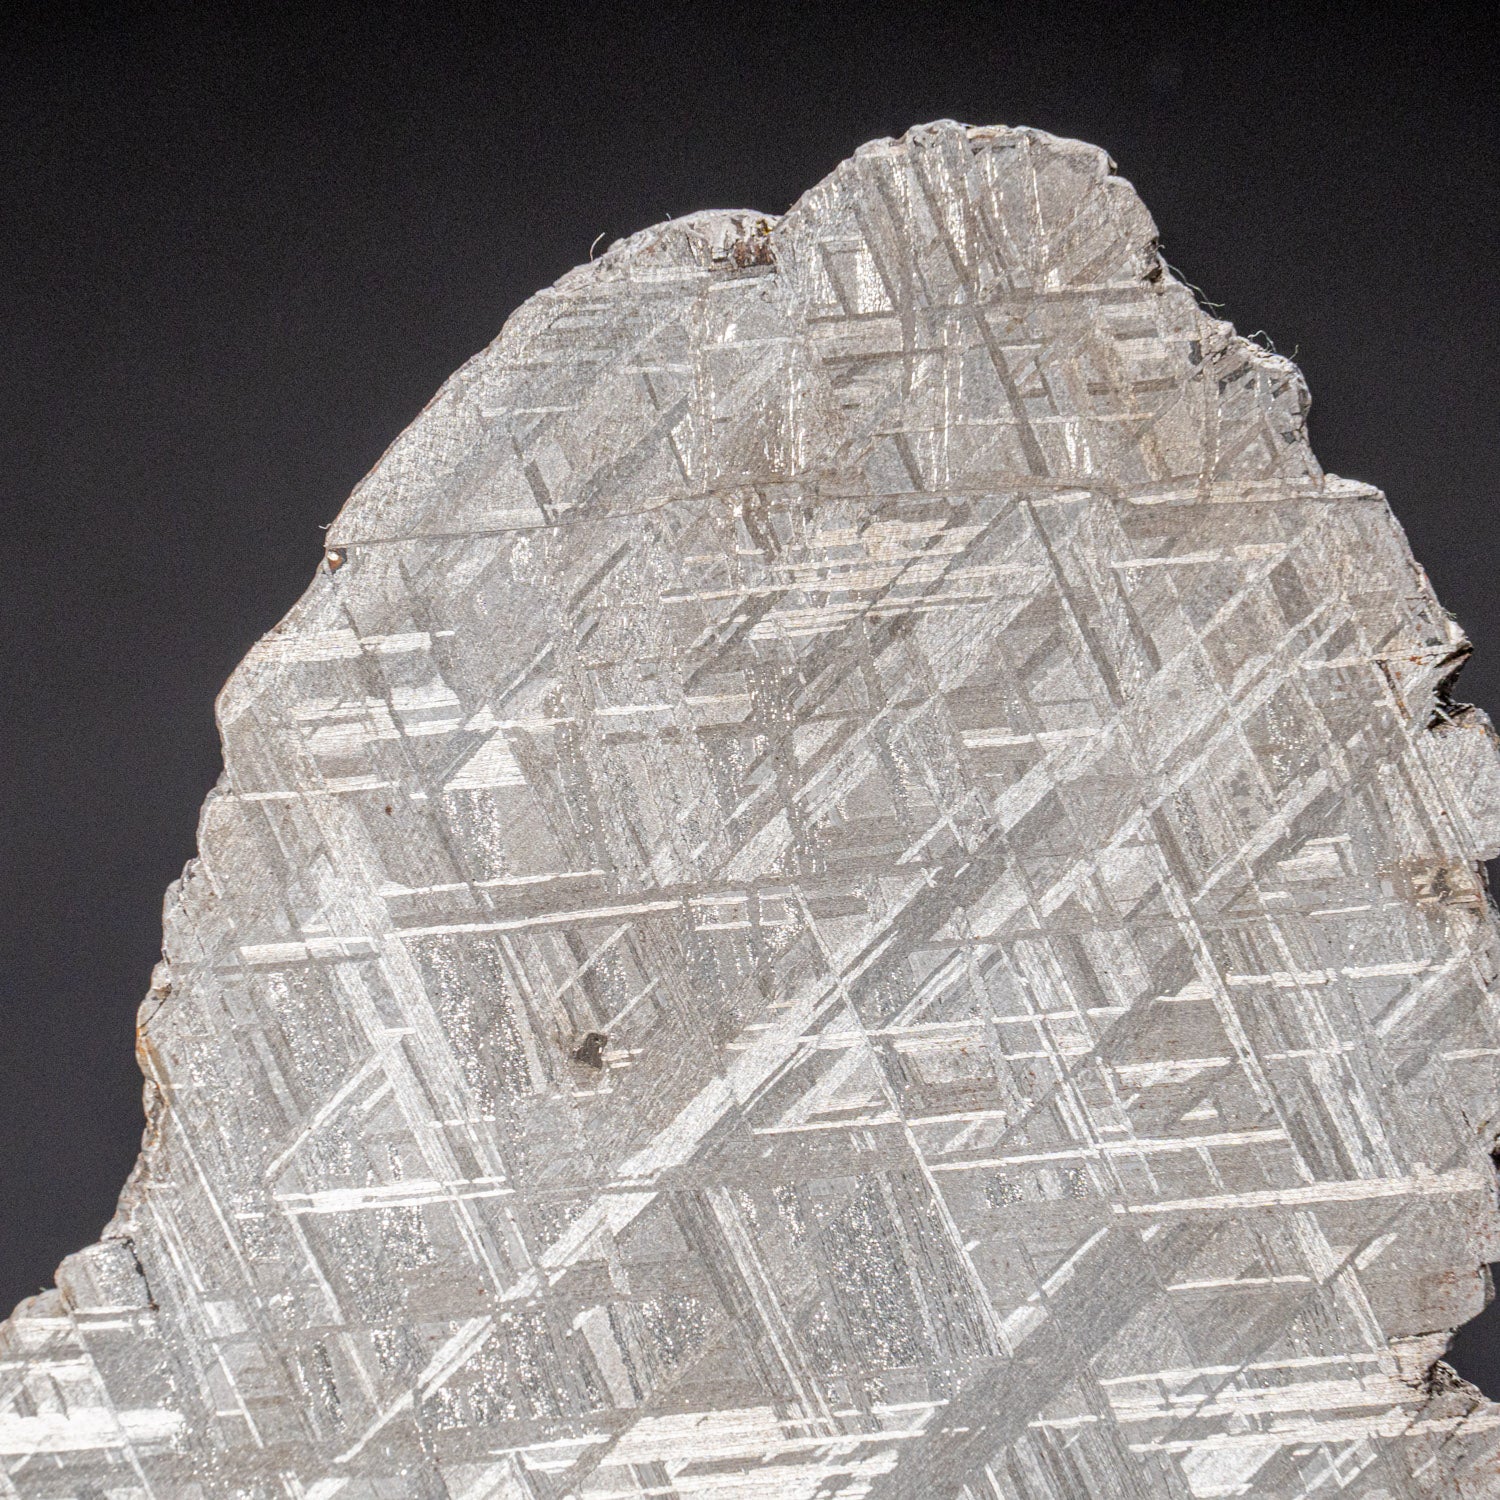 Genuine Large Muonionalusta Meteorite Slice (12 lbs)